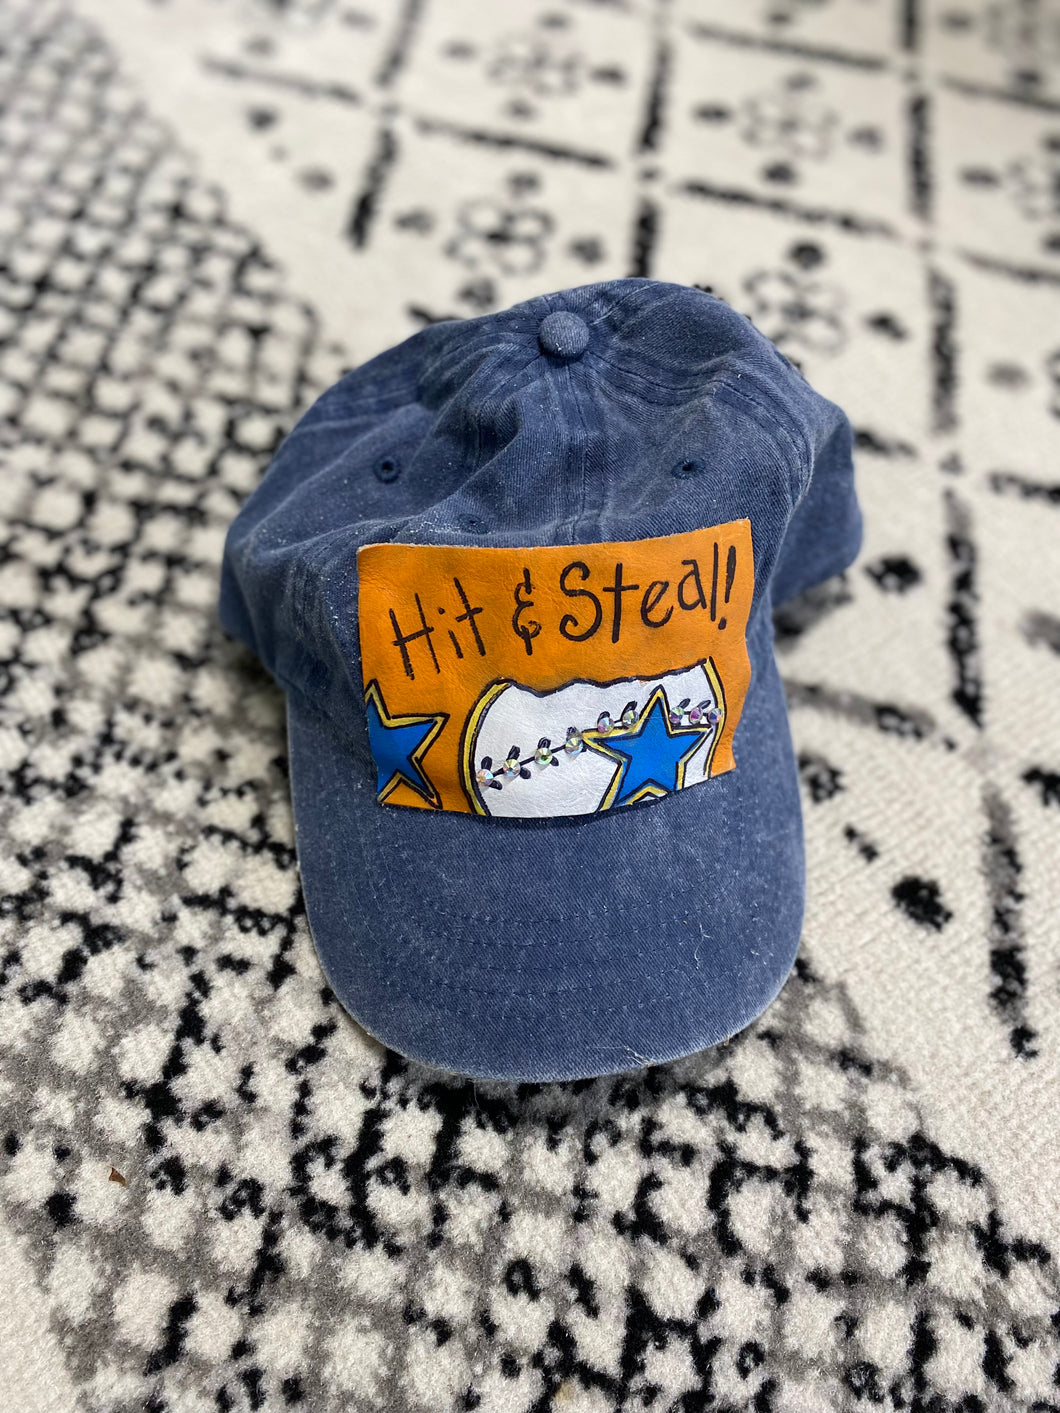 Hit & Steal Baseball Caps